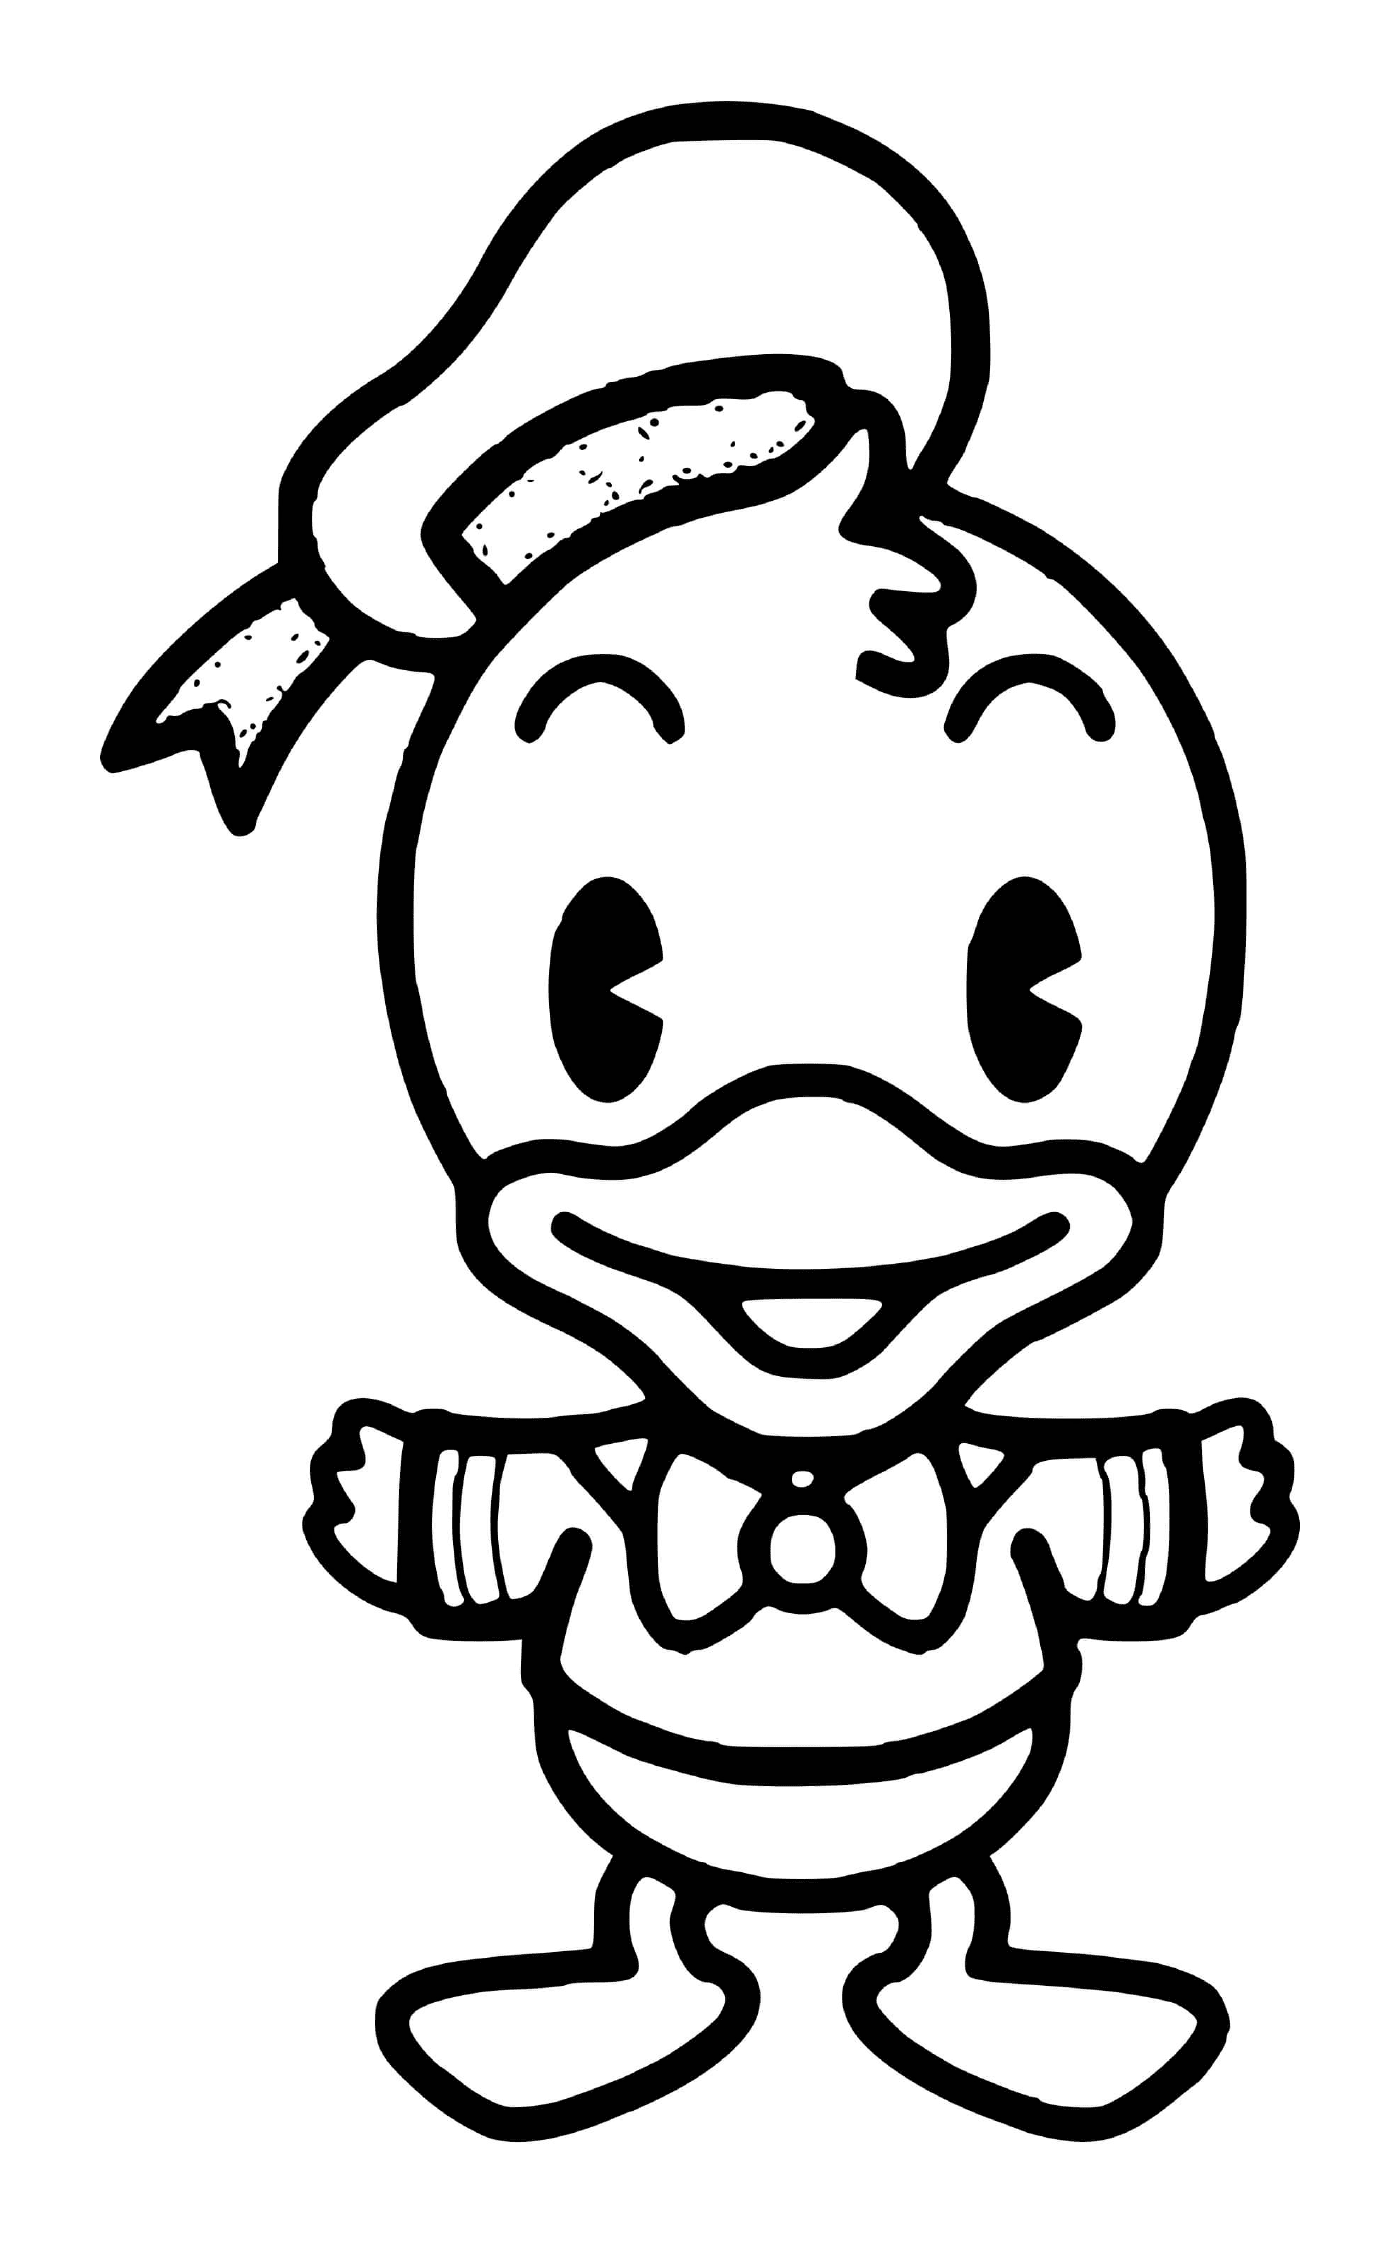  Donald duck 可爱的宝宝 